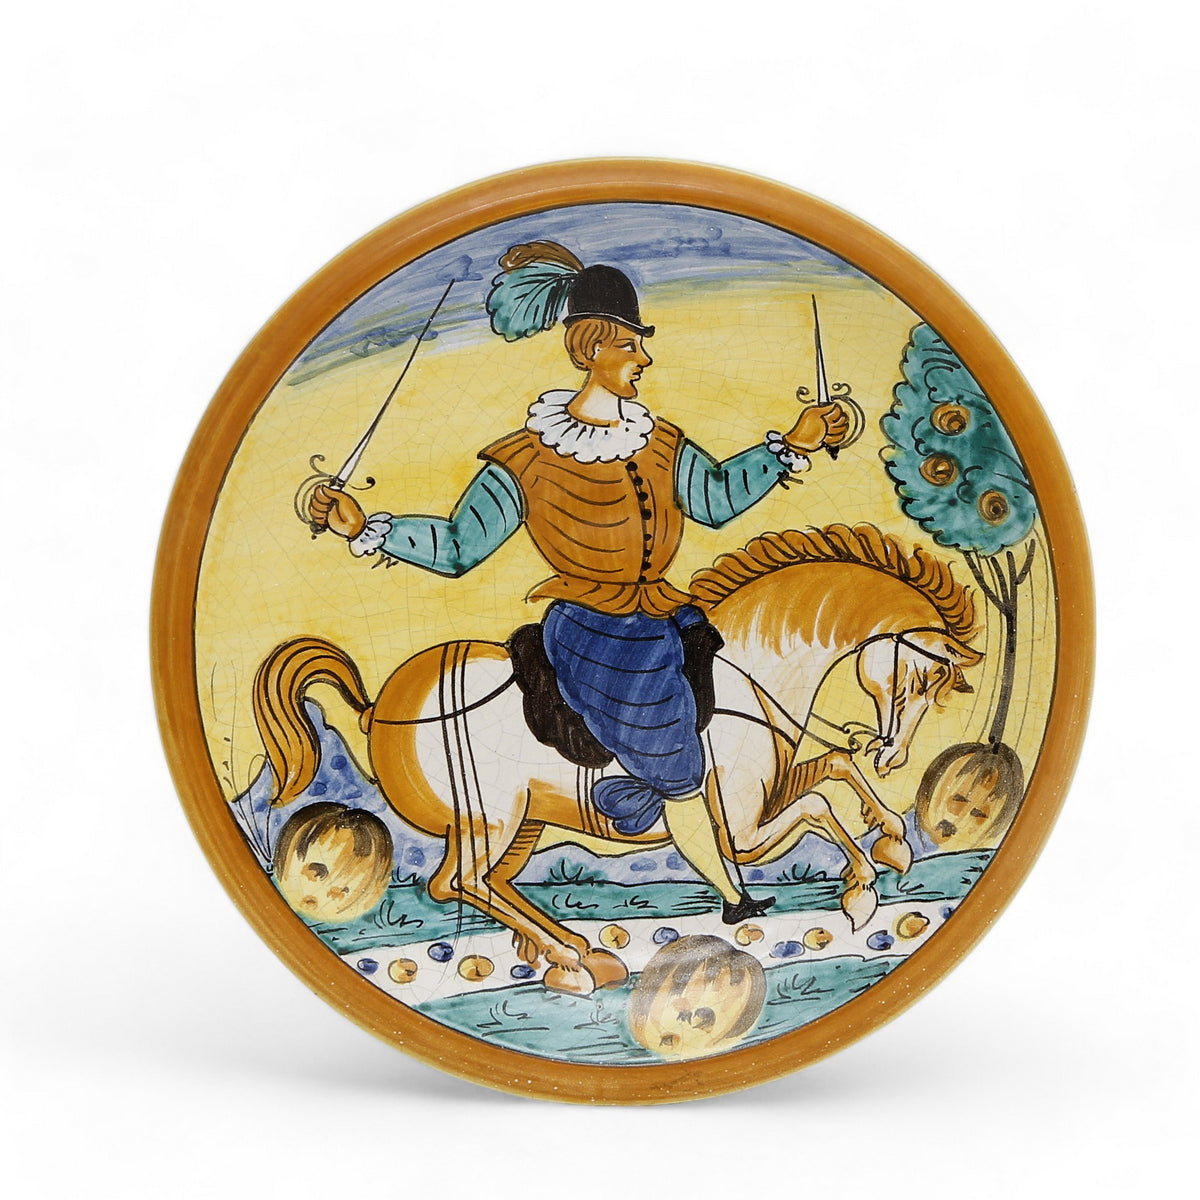 TUSCAN MAJOLICA: Medium wall plate featuring equestrian medieval man